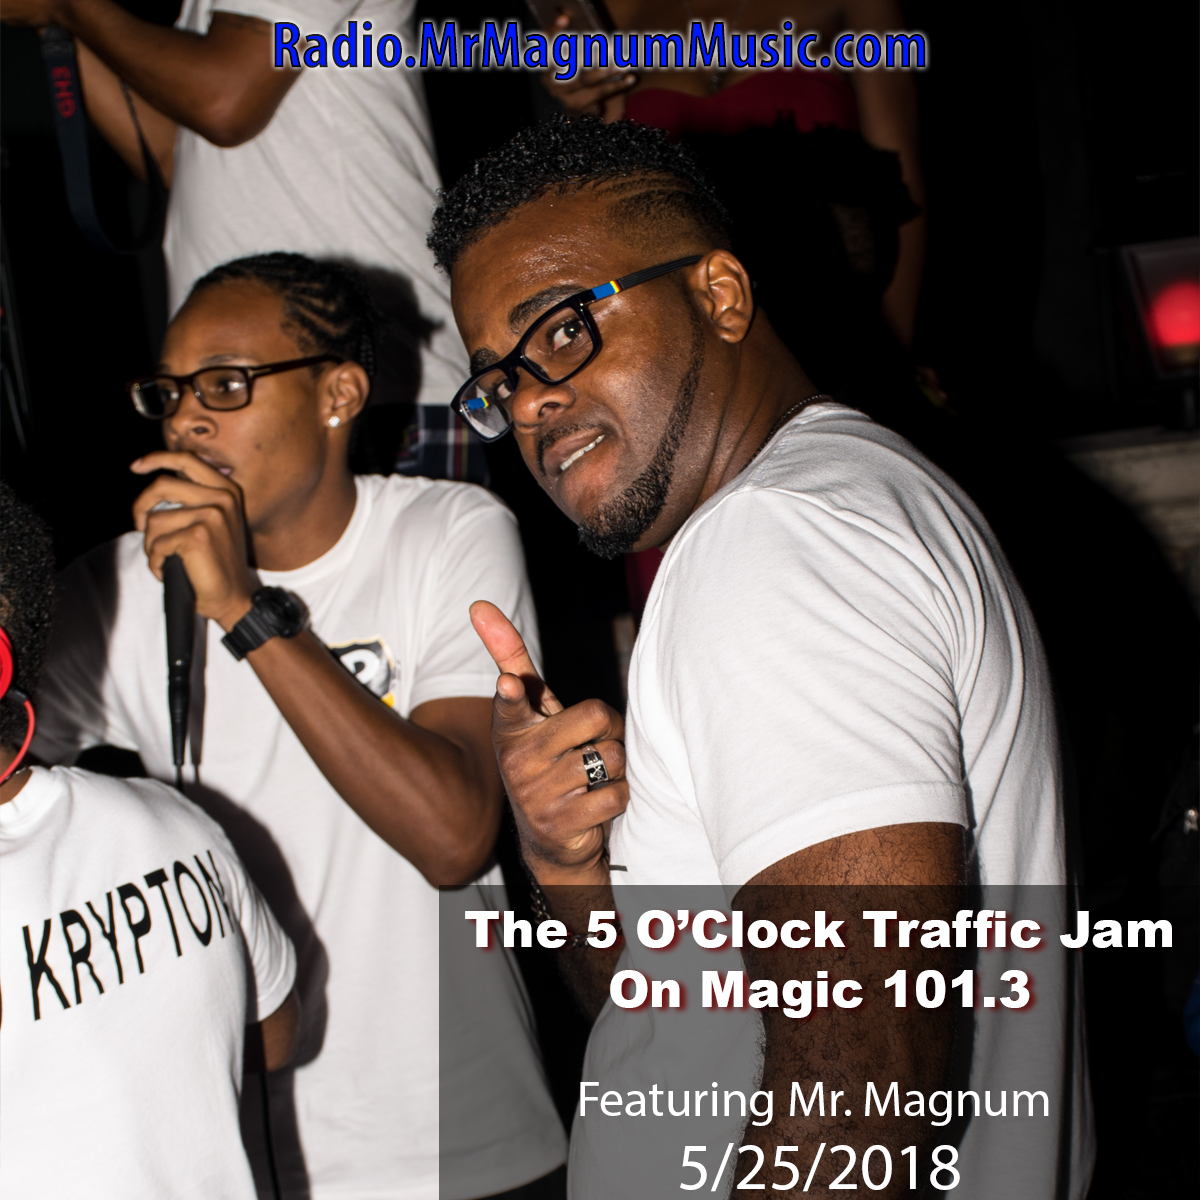 The 5 O'Clock Traffic Jam 20180525 featuring Gainesville's #1 DJ, Mr. Magnum on Magic 101.3